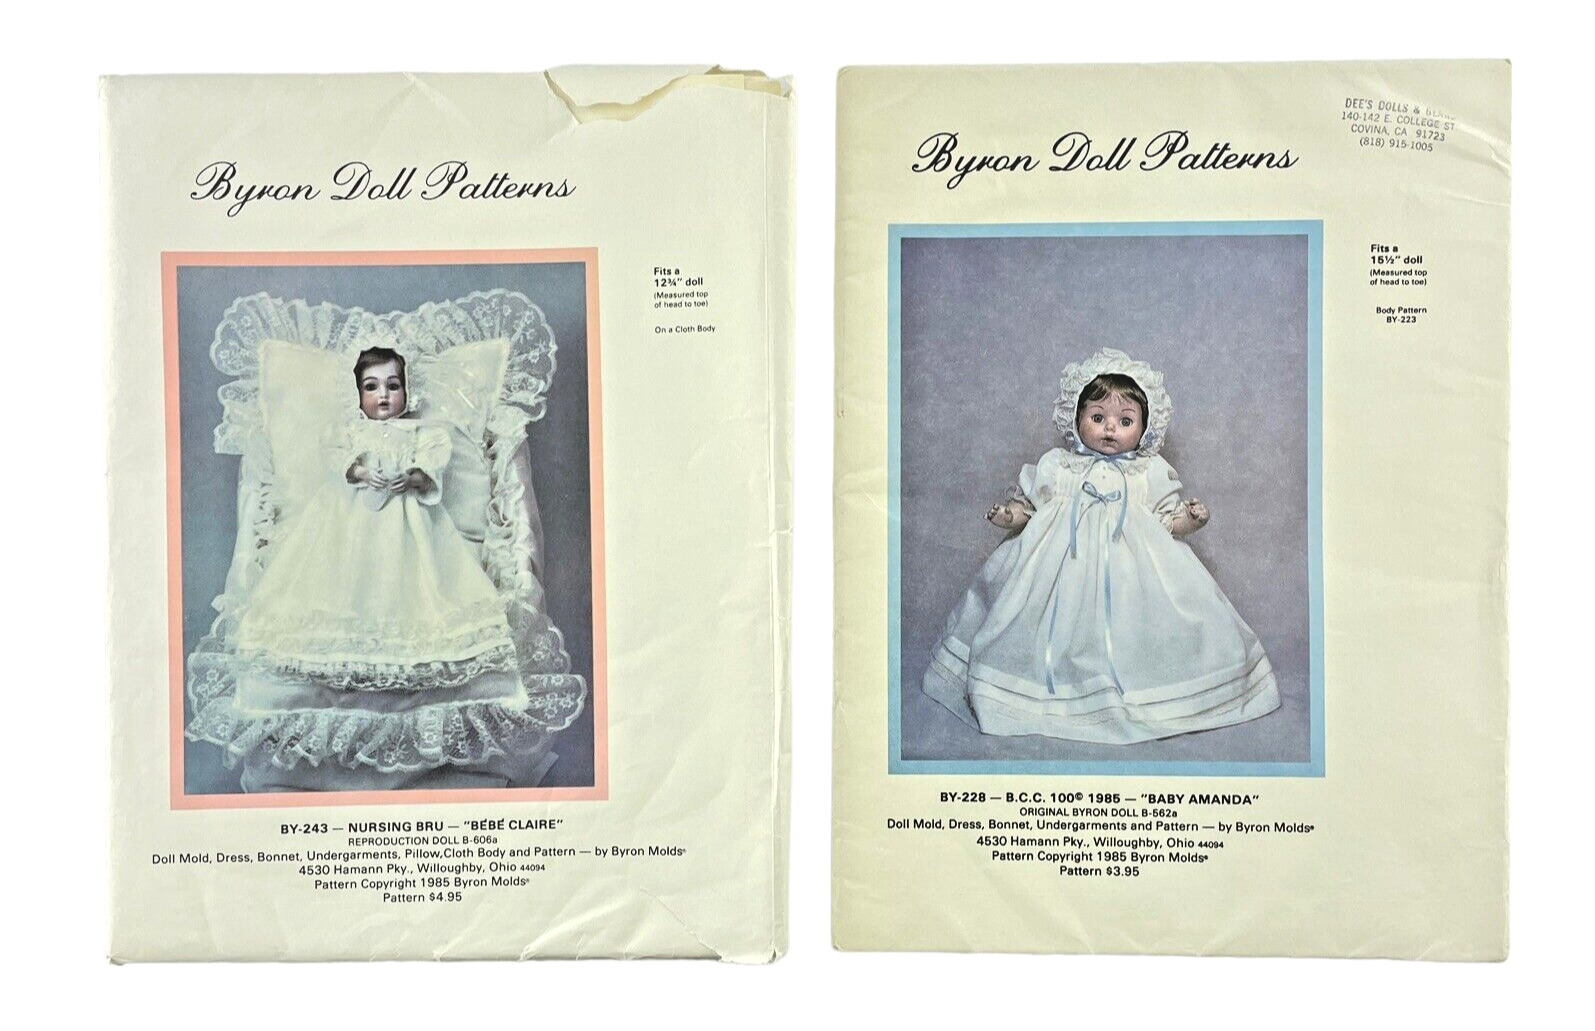 Byron\'s Doll Clothing PATTERNS Lot of 2 Nursing Bru 243 and Baby Amanda 562